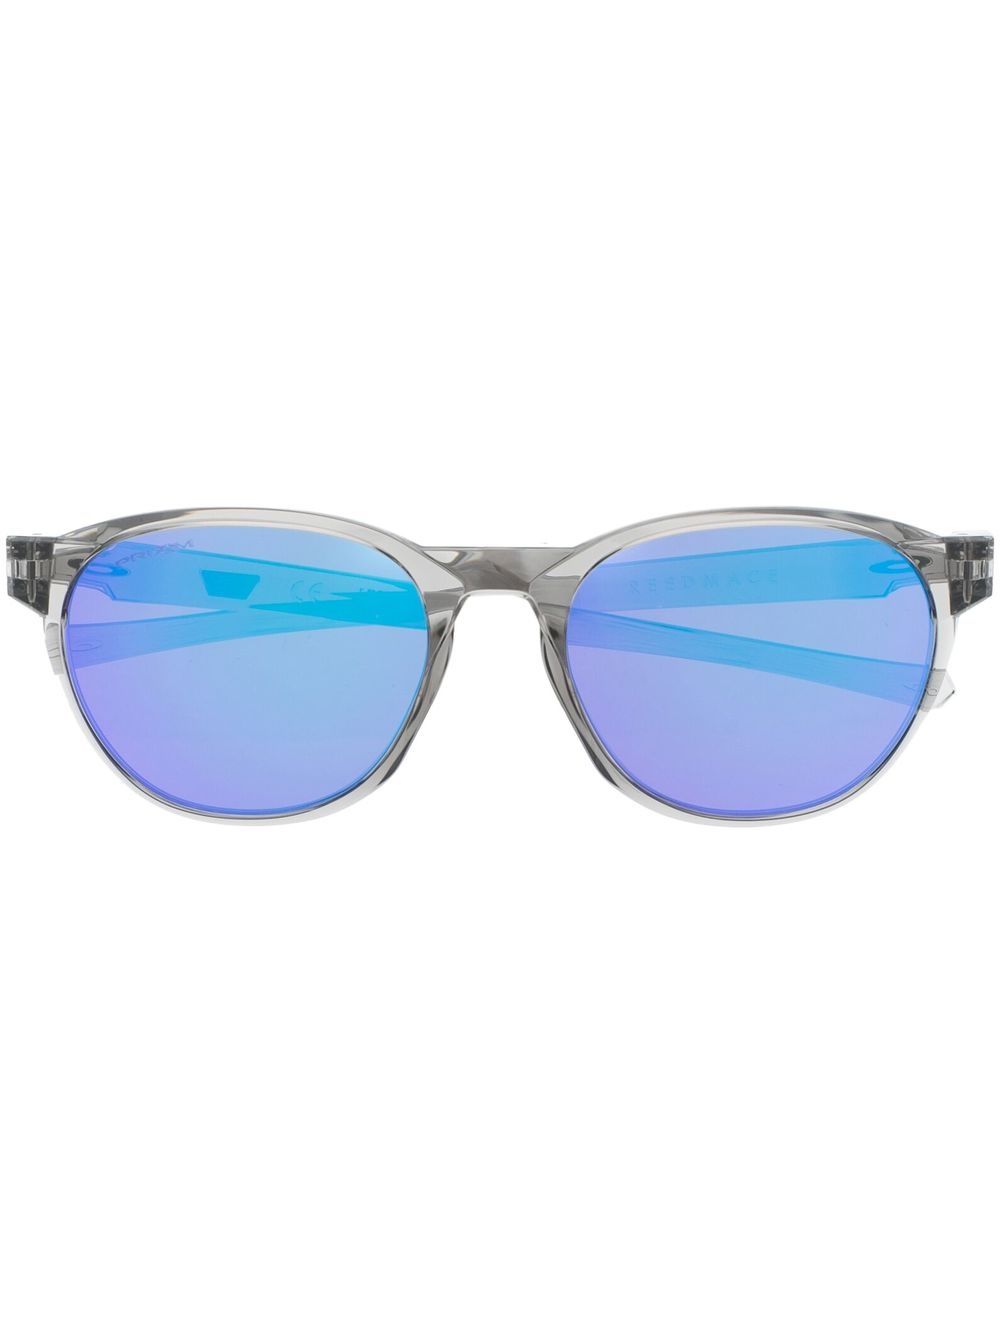 Mirrored-lenses sunglasses